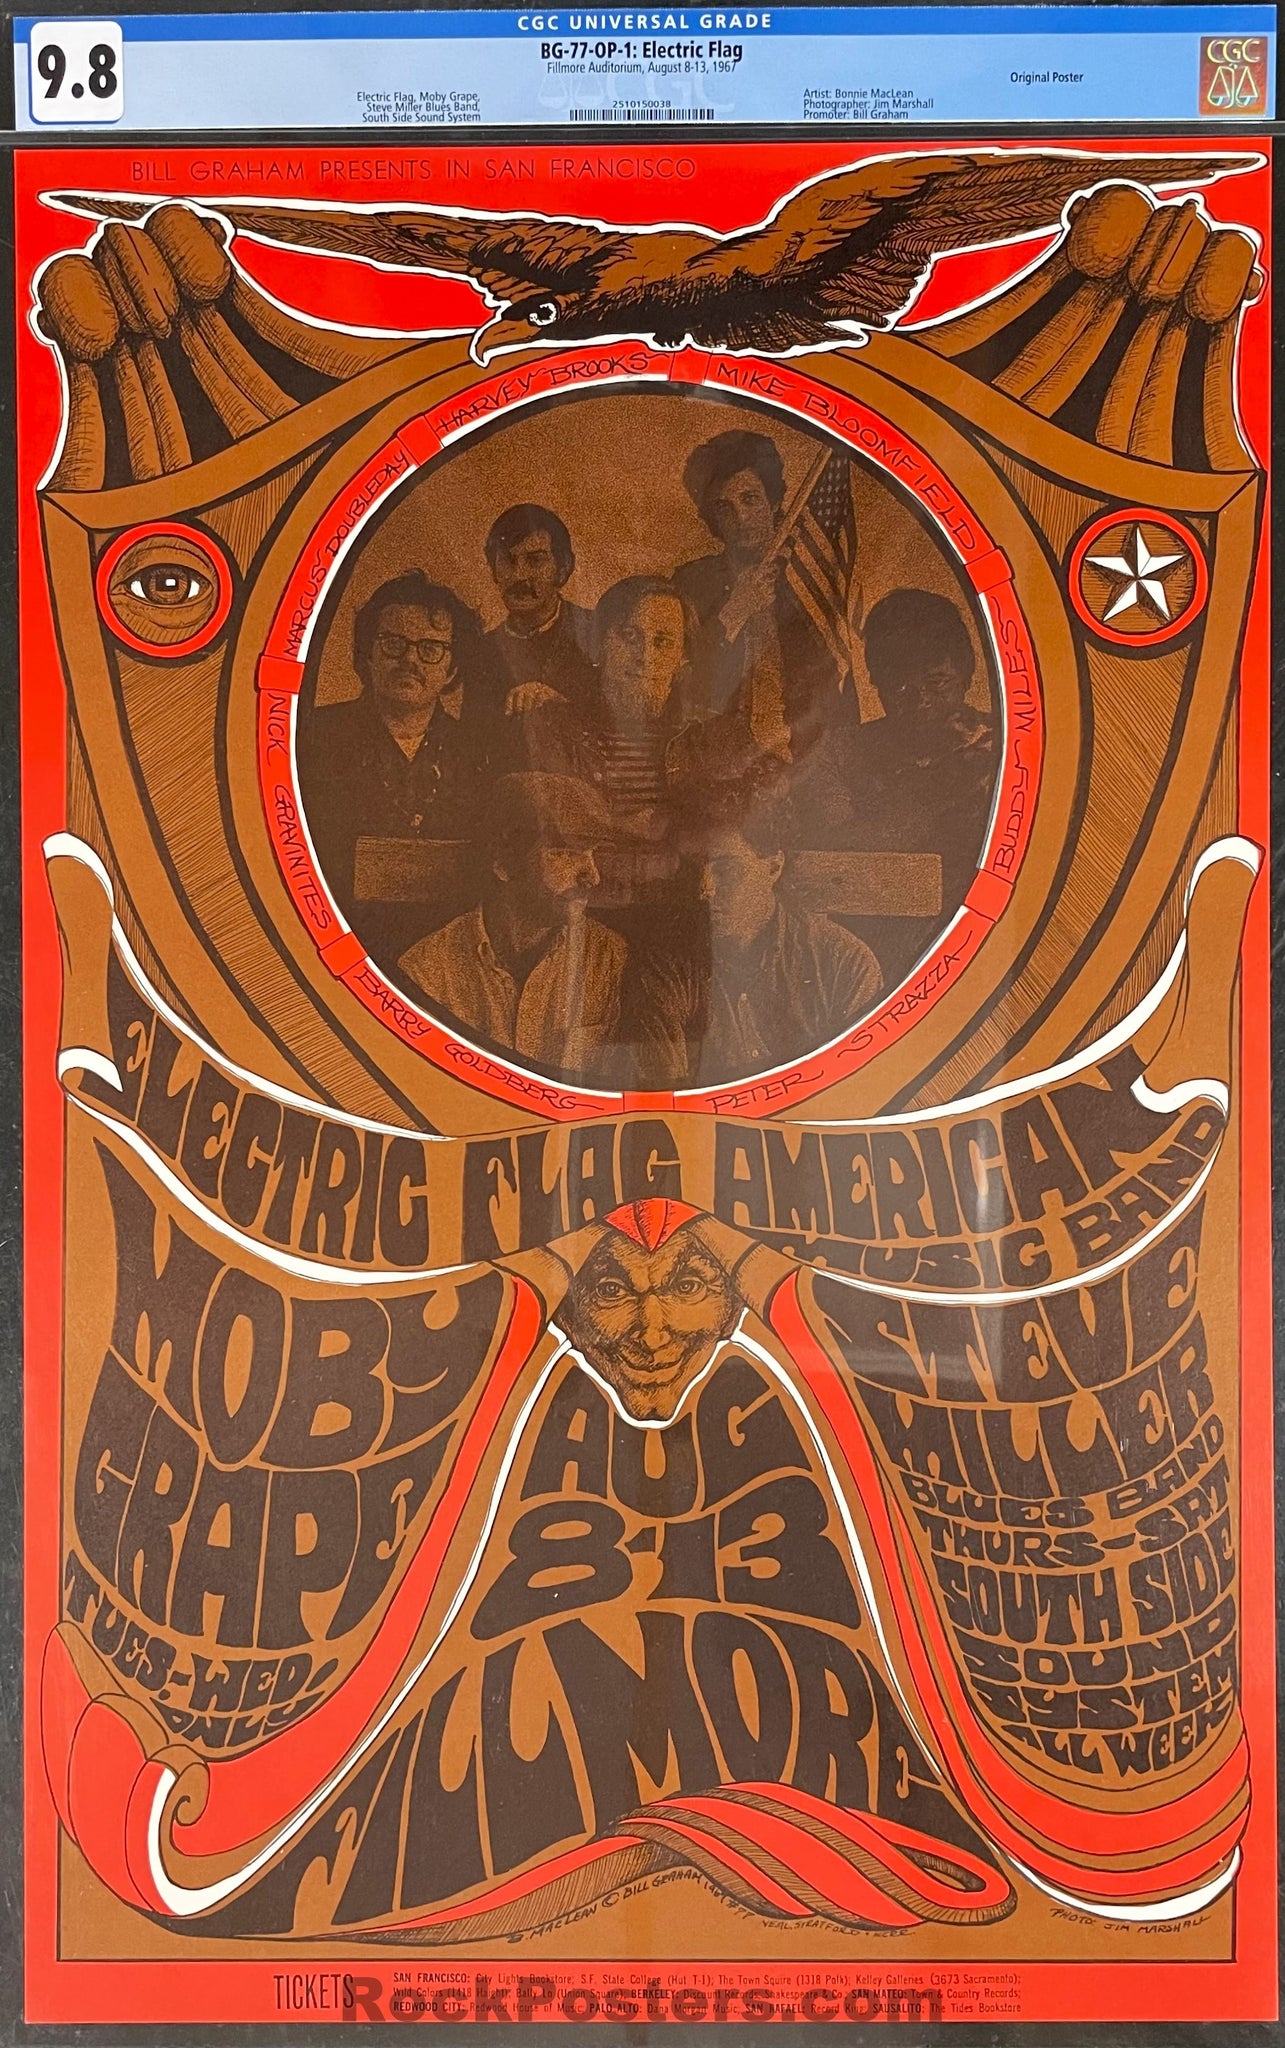 BG-77 - Electric Flag - Bonnie MacLean - 1967 Poster - Fillmore Auditorium - CGC Graded 9.8